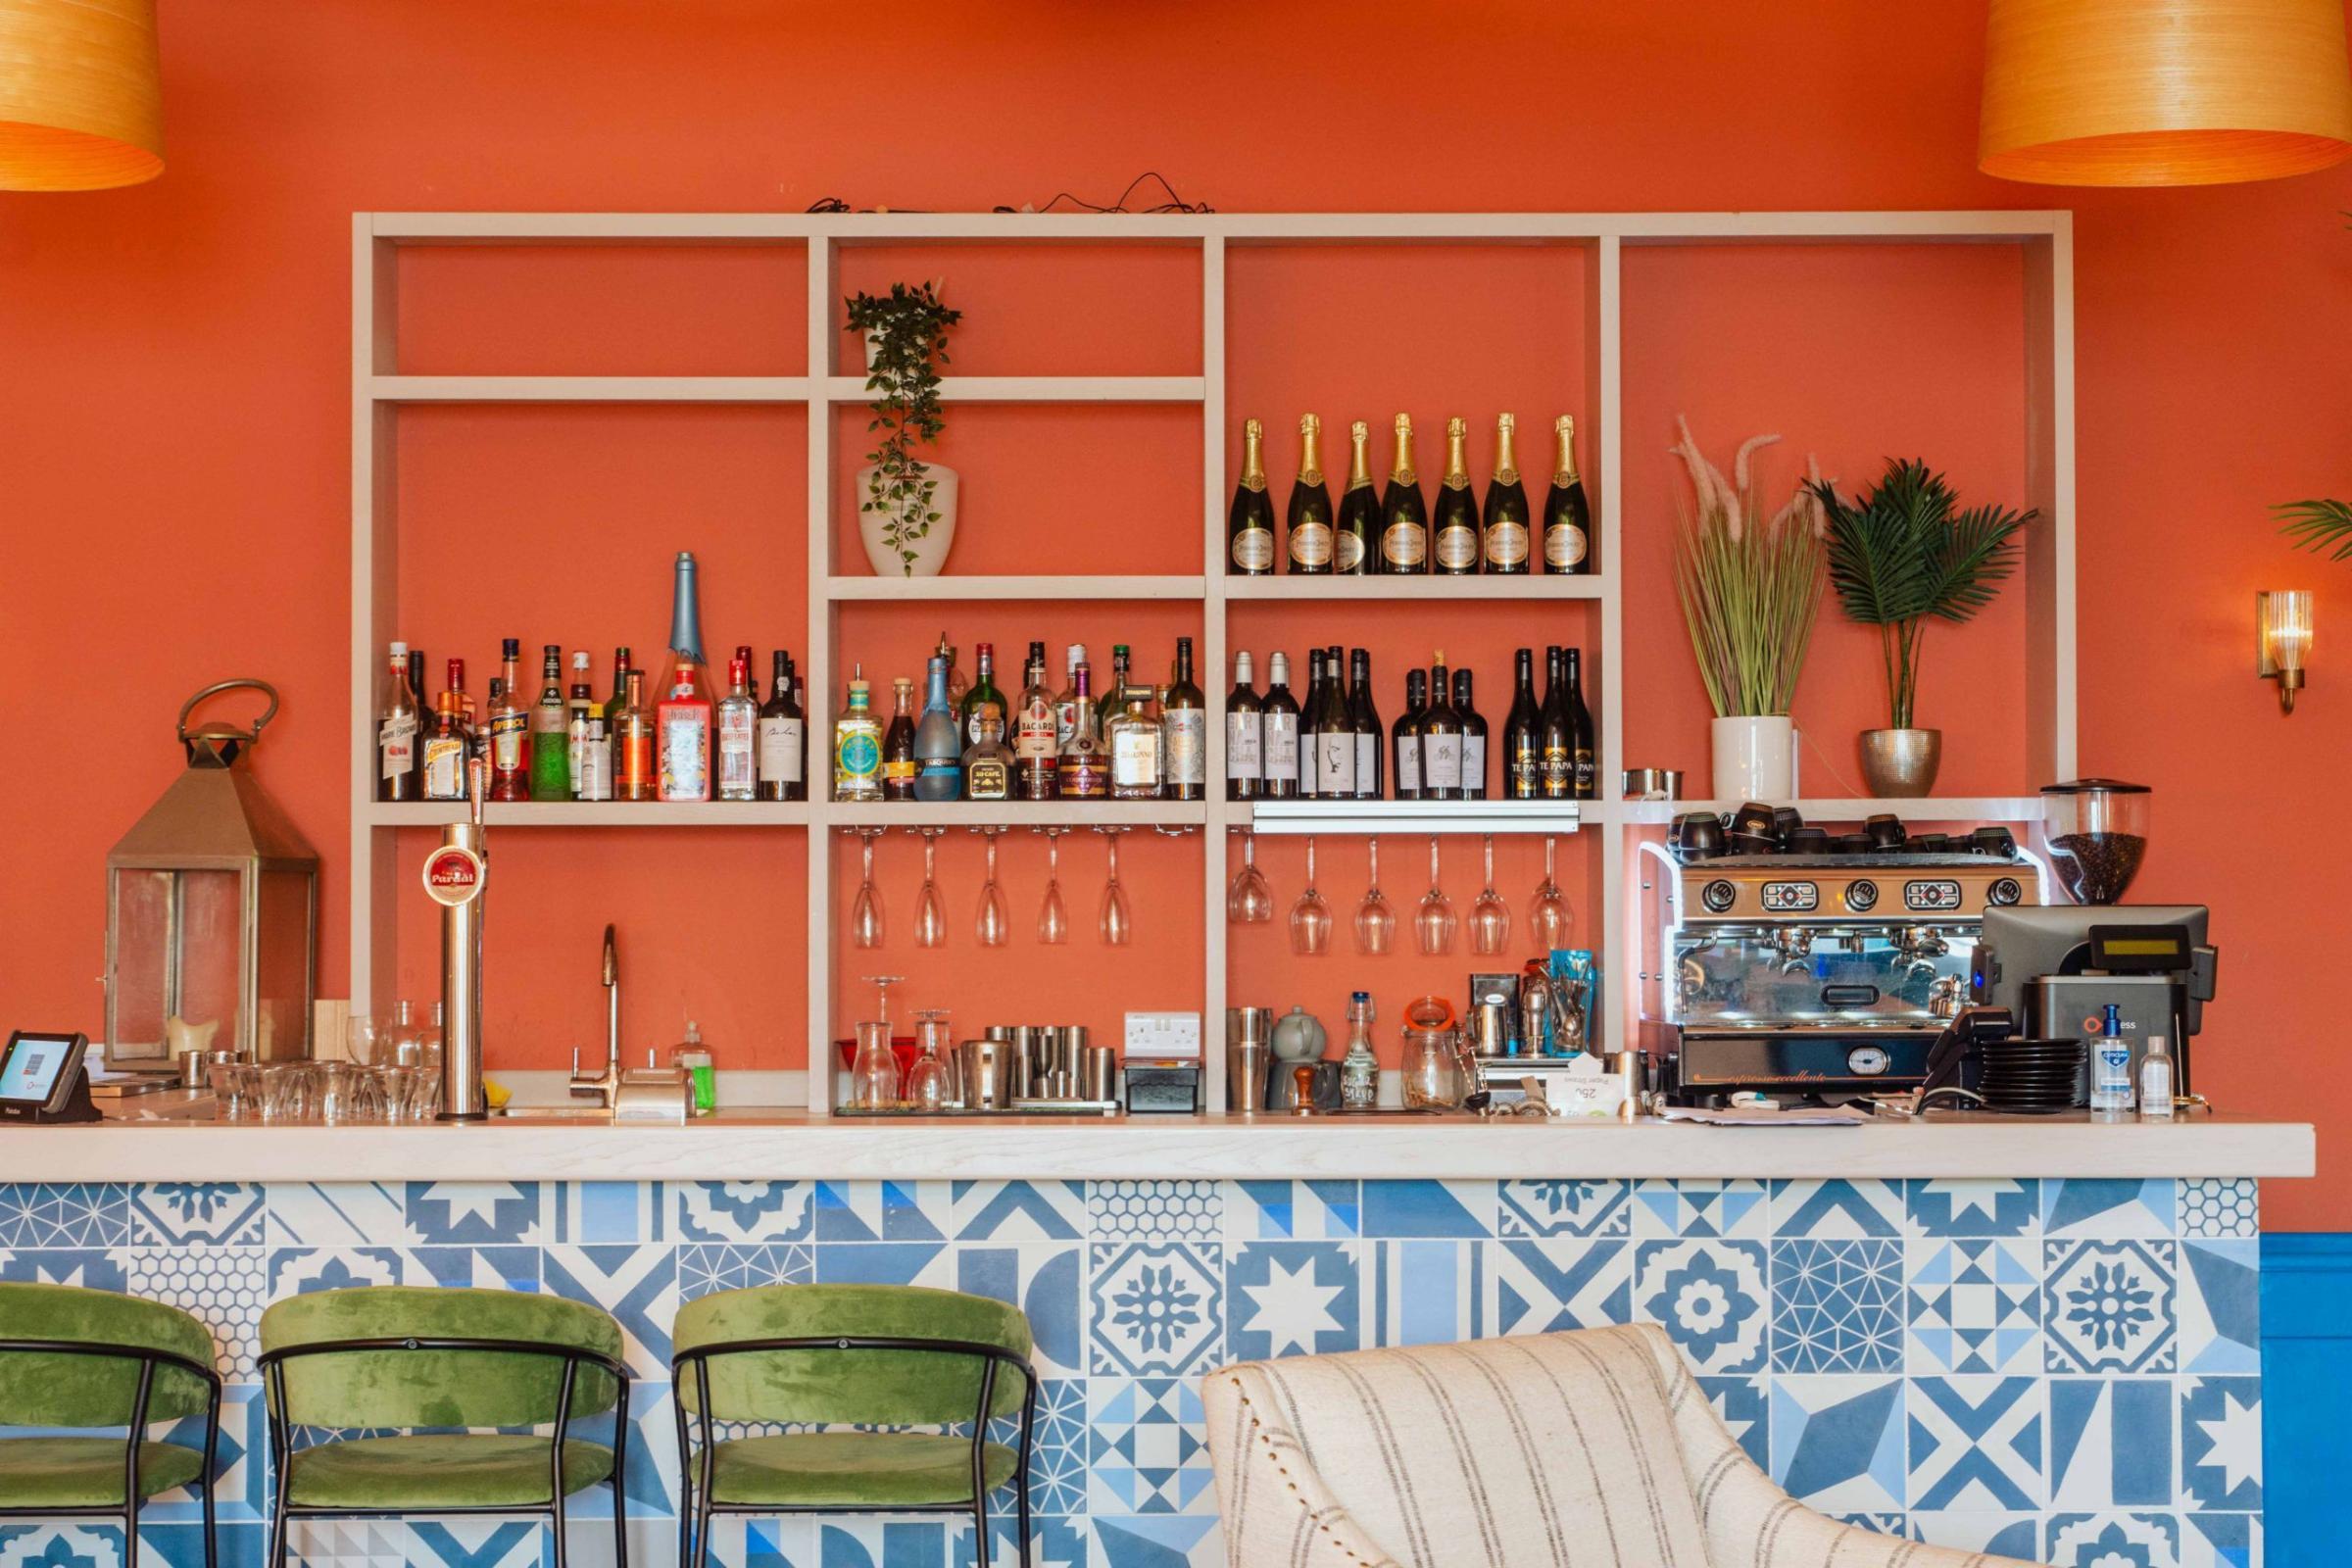 New Mediterranean-inspired interiors at Amelie restaurant in Porthleven Picture: Tom Meldrum